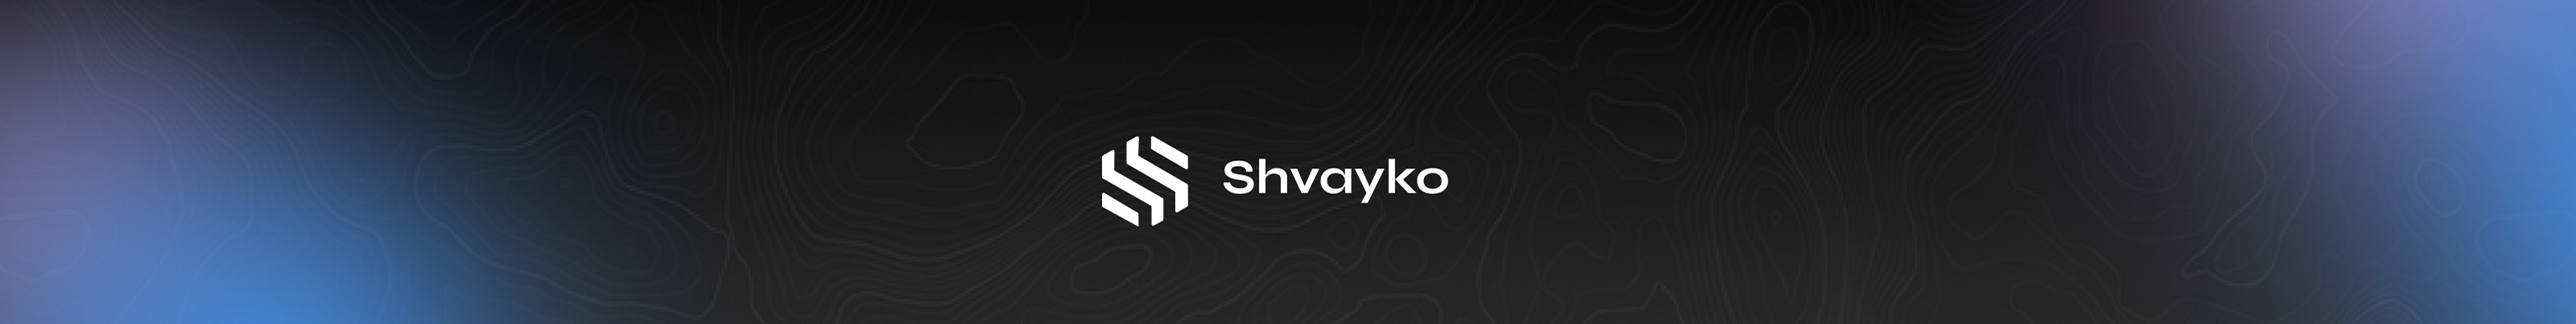 Pavel Shvayko's profile banner